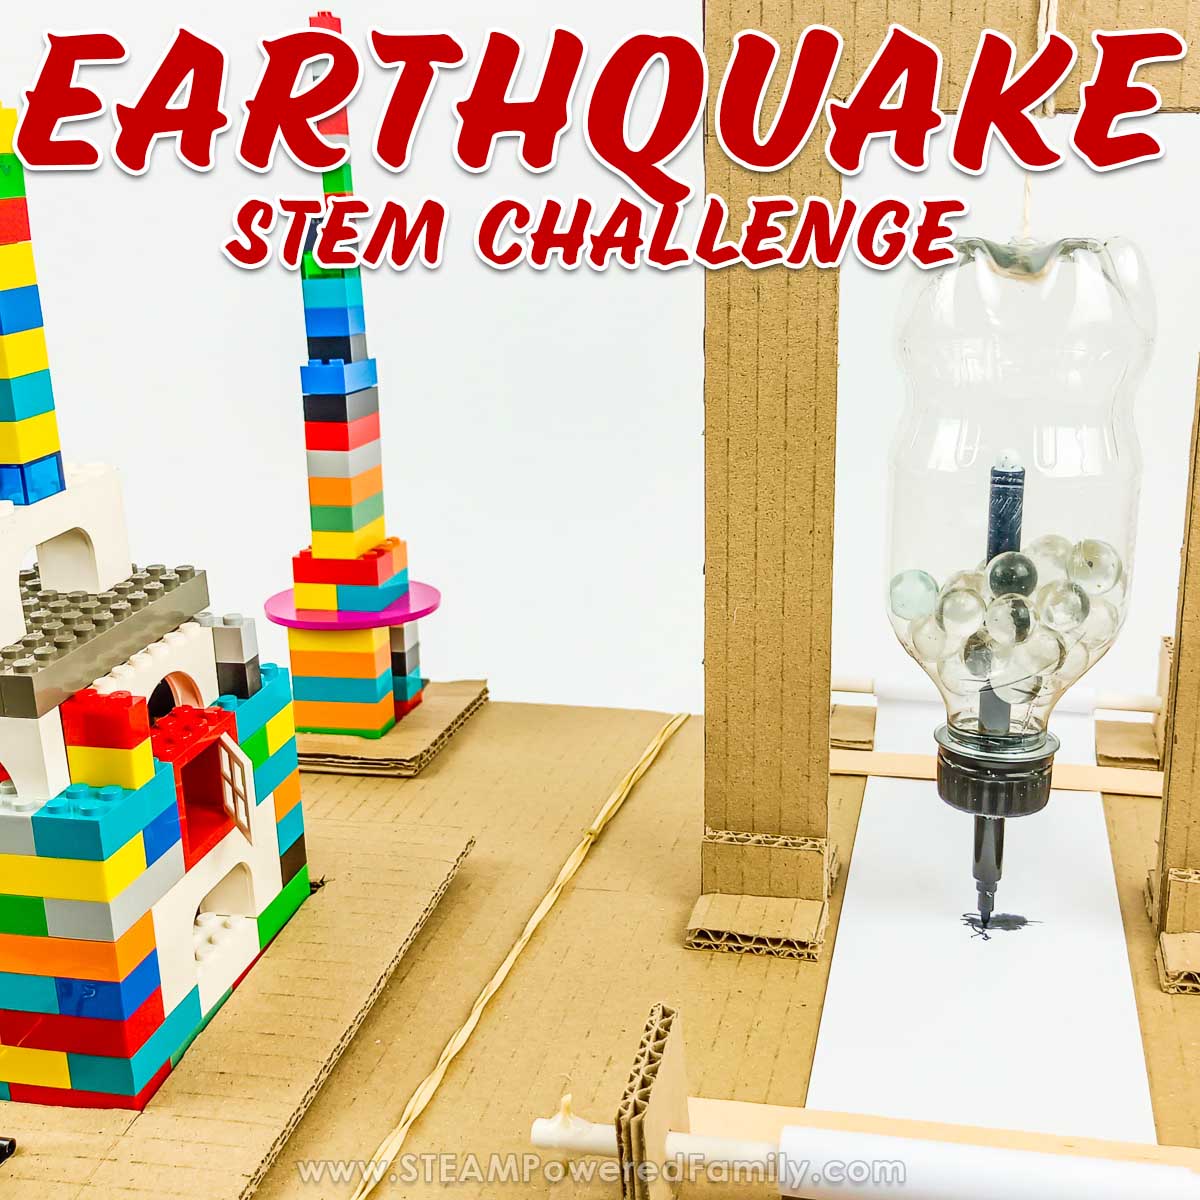 Earthquake STEM Challenge